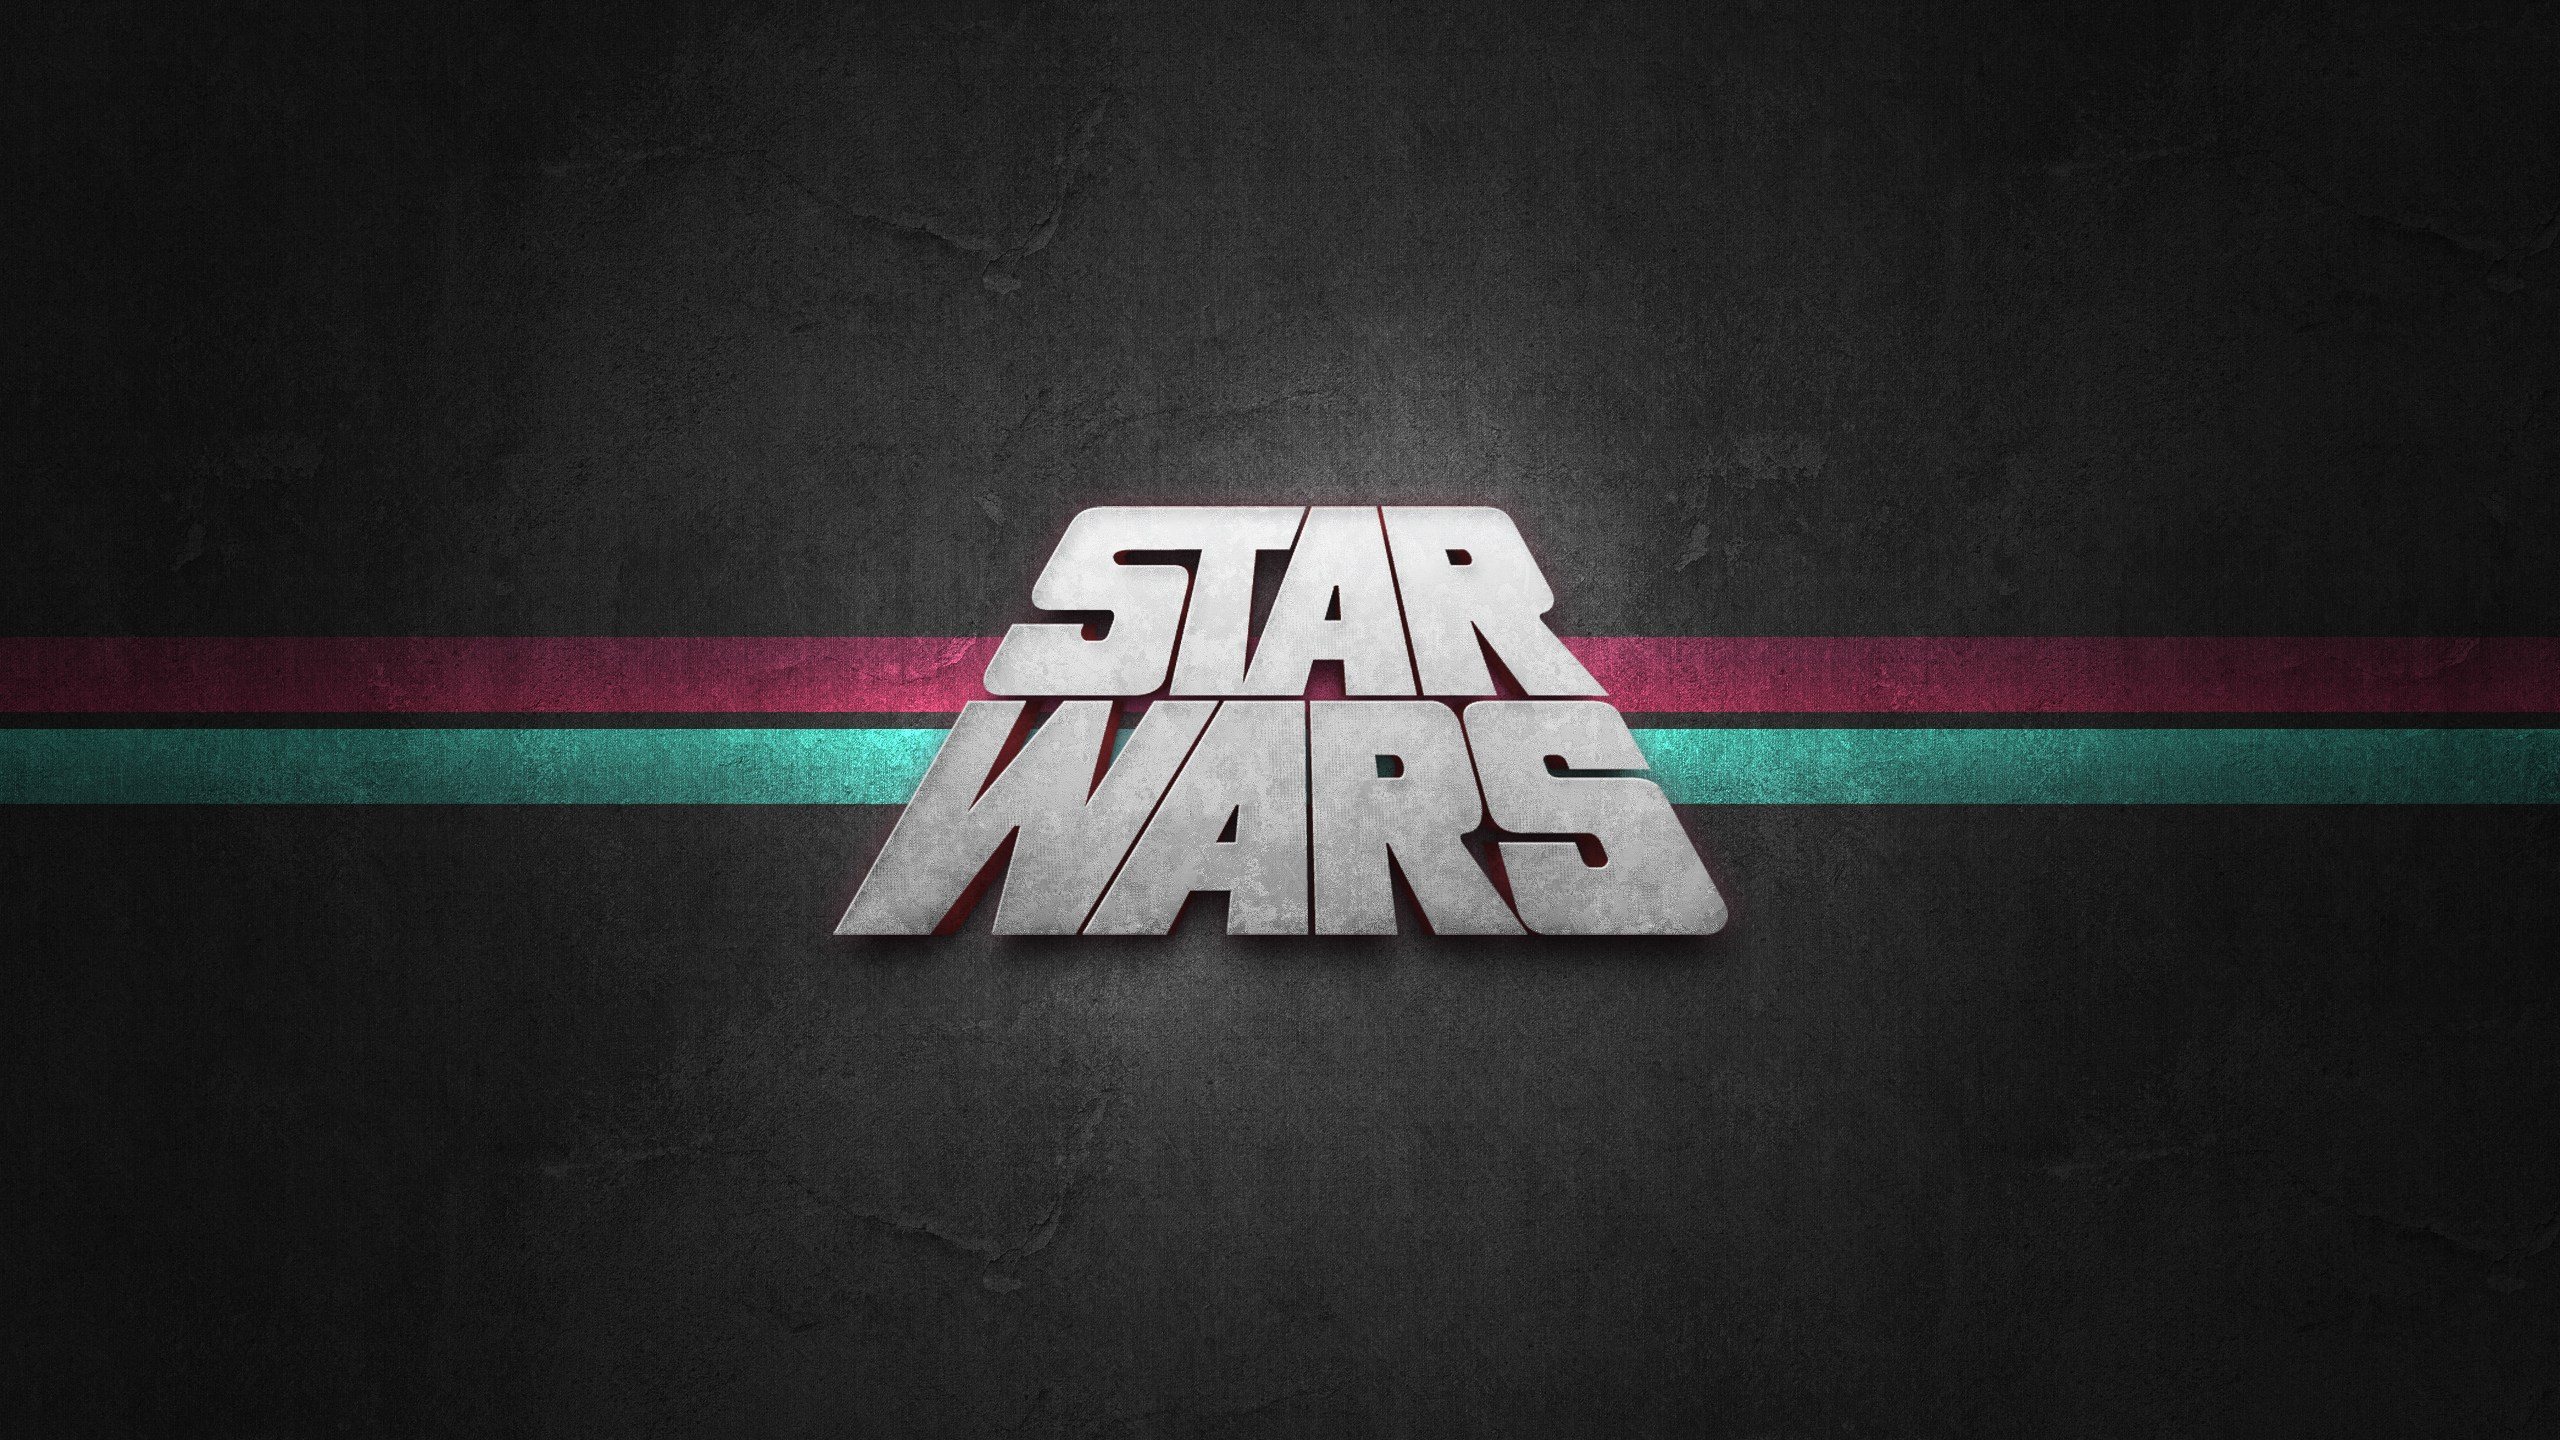 Star Wars Full HD Wallpapers download 1080p desktop backgrounds 2560x1440